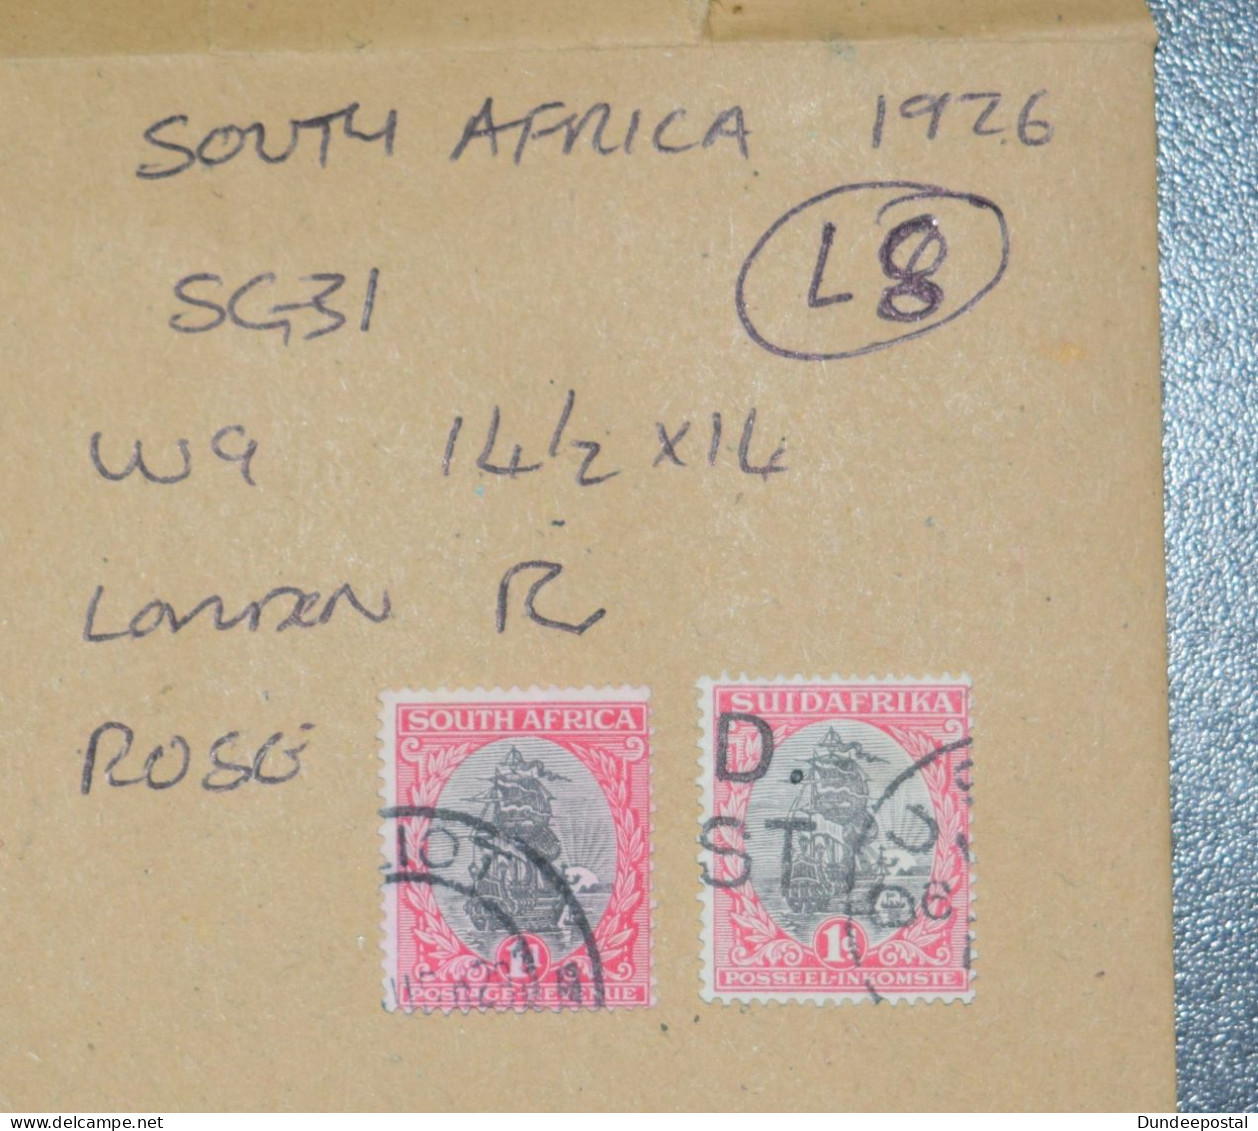 SOUTH AFRICA   STAMPS Drommedaris Ship 1d  1926  L8  ~~L@@K~~ - Used Stamps